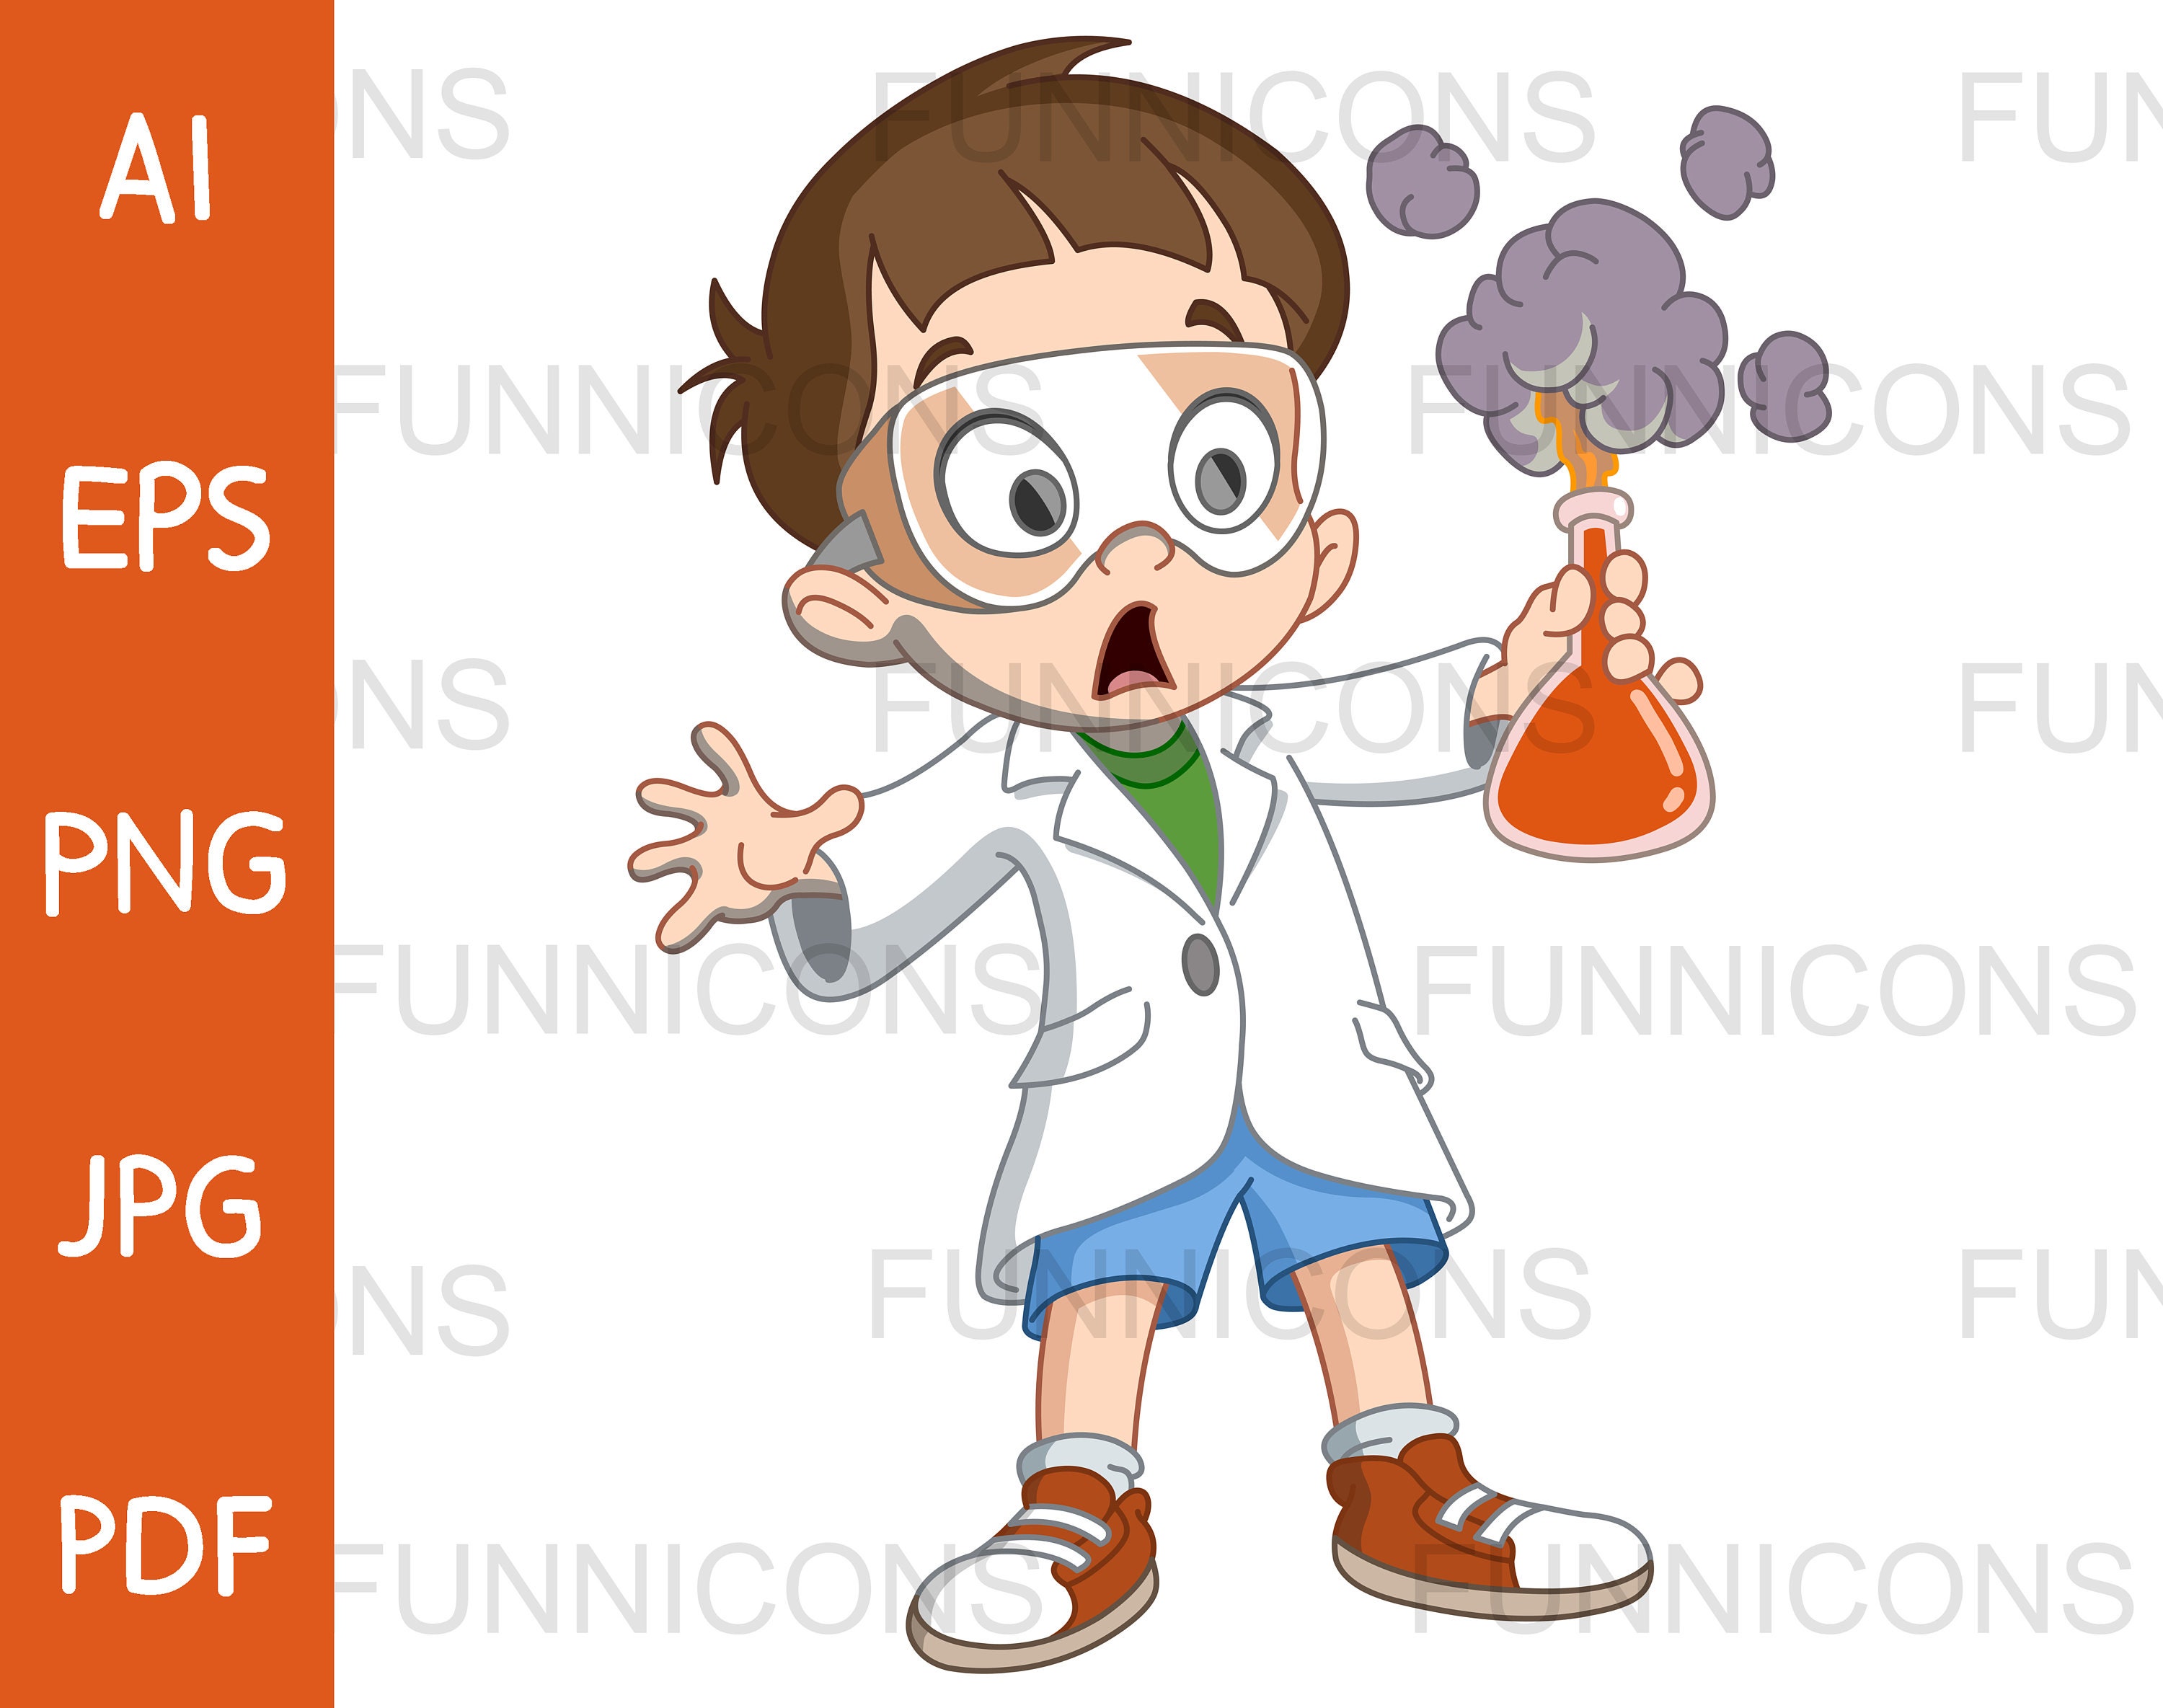 kid scientist cartoon